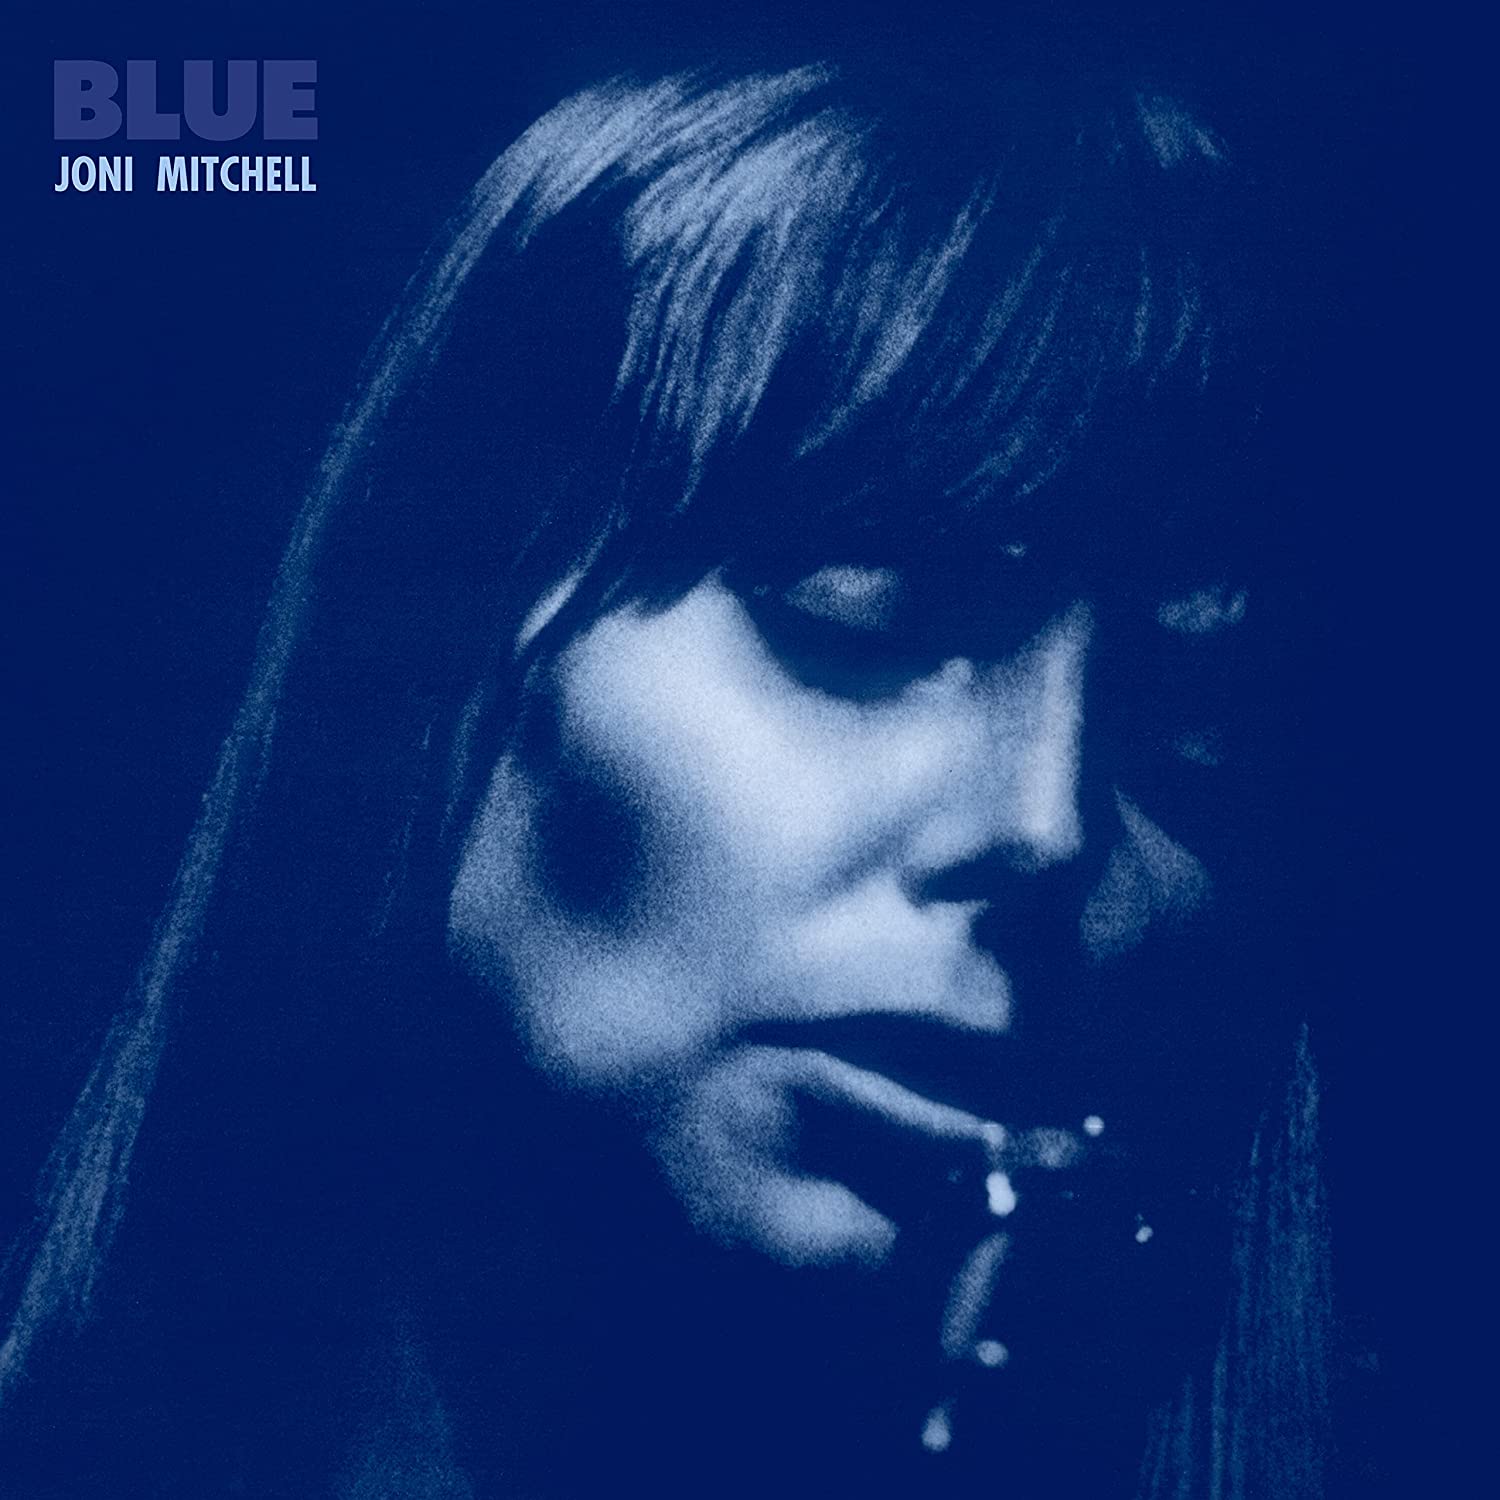 Joni Mitchell - Blue - 180 gr vinyl